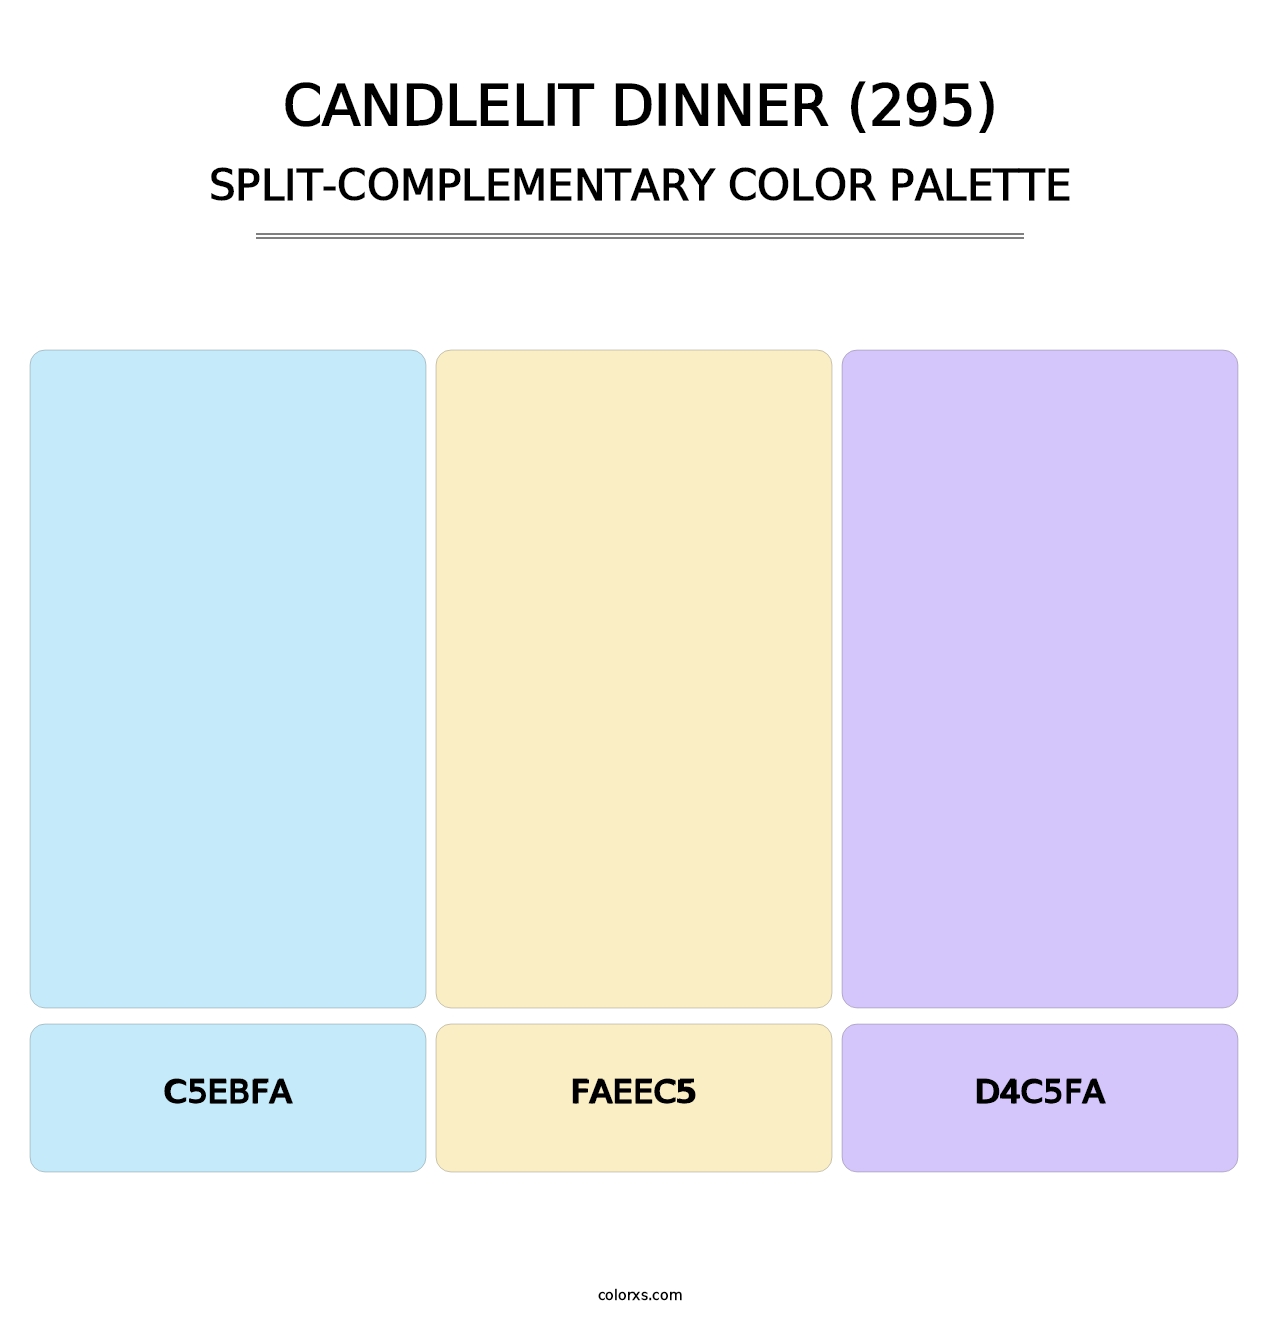 Candlelit Dinner (295) - Split-Complementary Color Palette